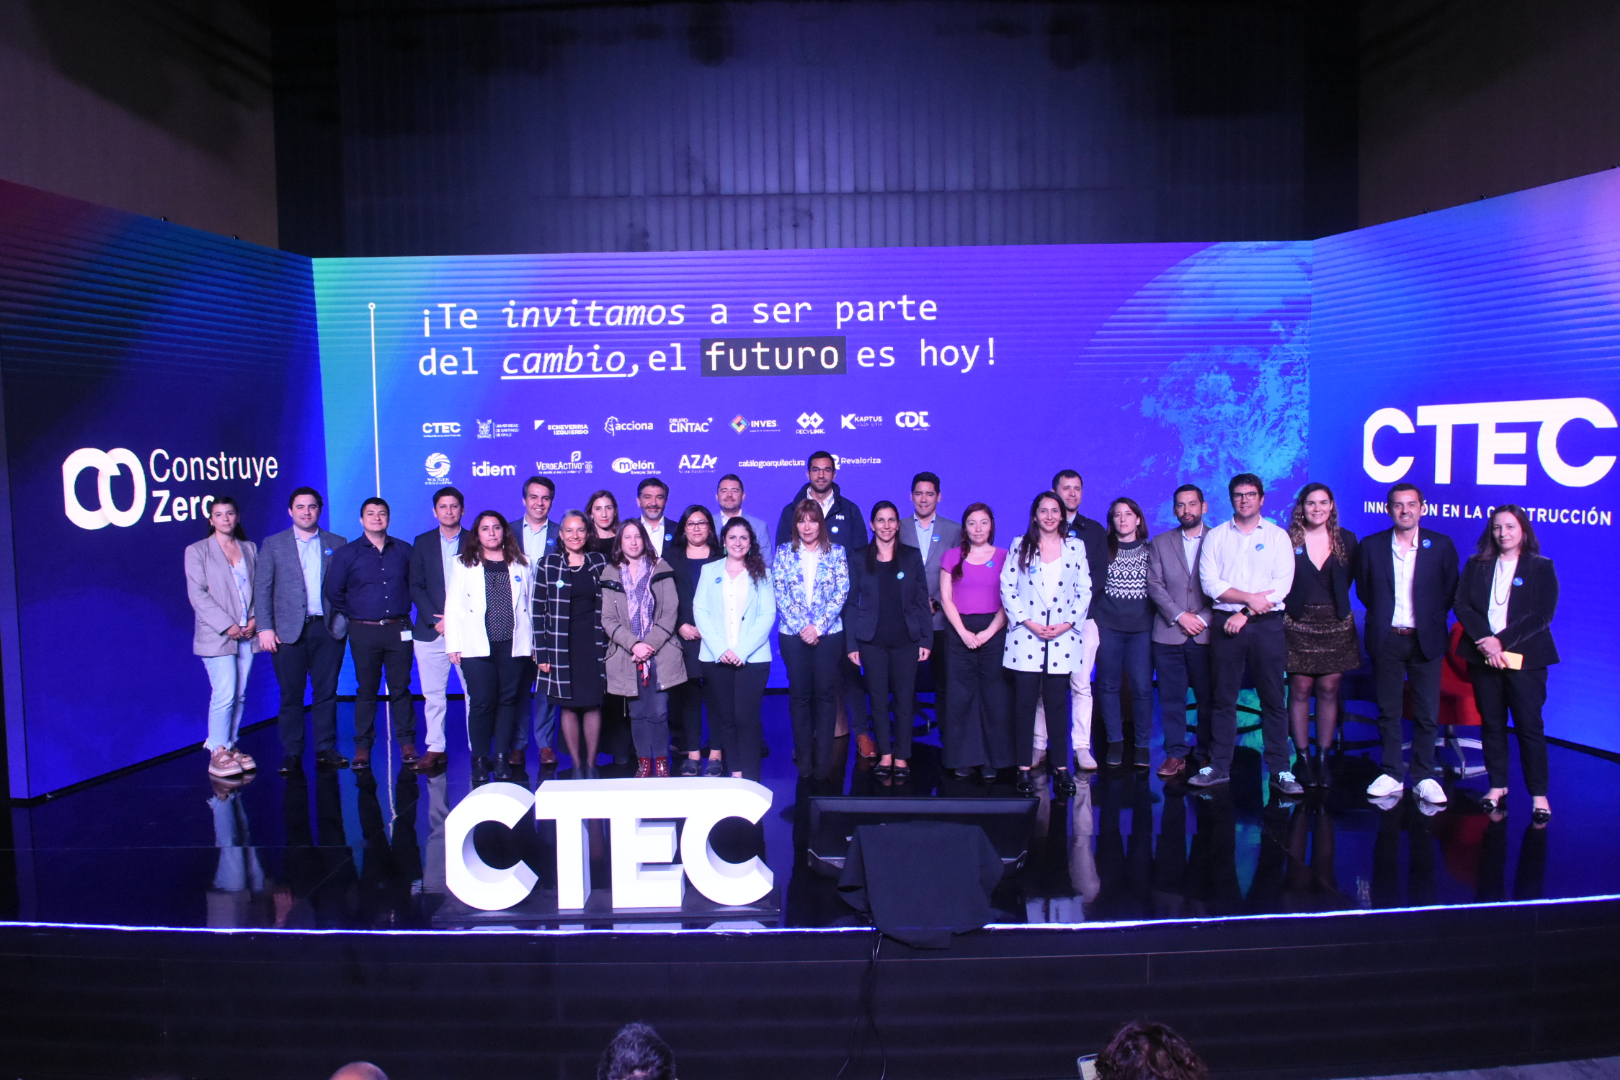 CTEC lanzó Construye Zero, programa que busca hacer frente a la crisis climática